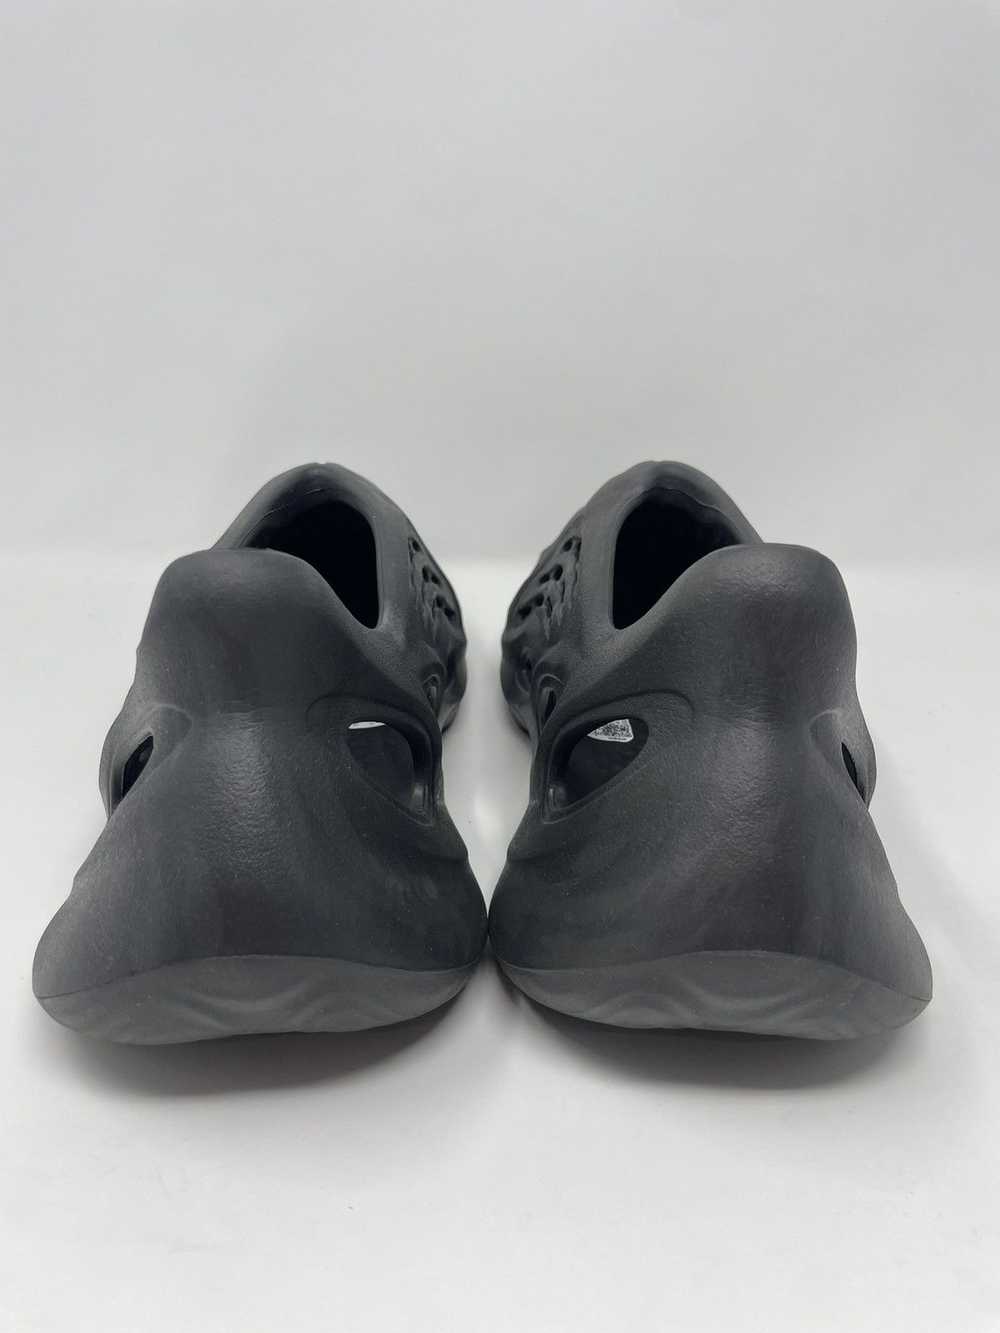 Adidas Yeezy Foam Runner Onyx - image 5